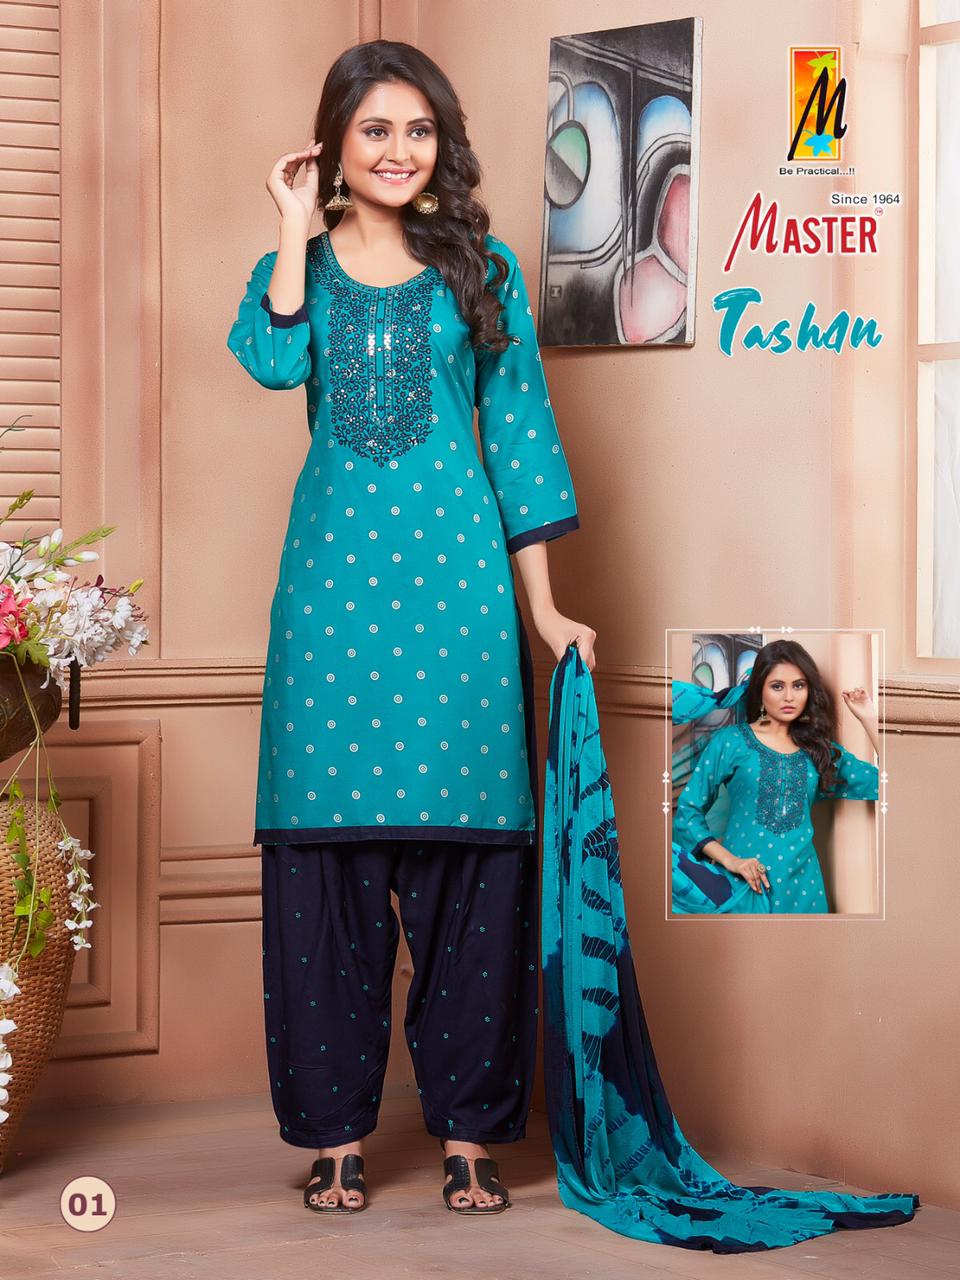 Tashan Master Rayon Readymade Salwar Suits